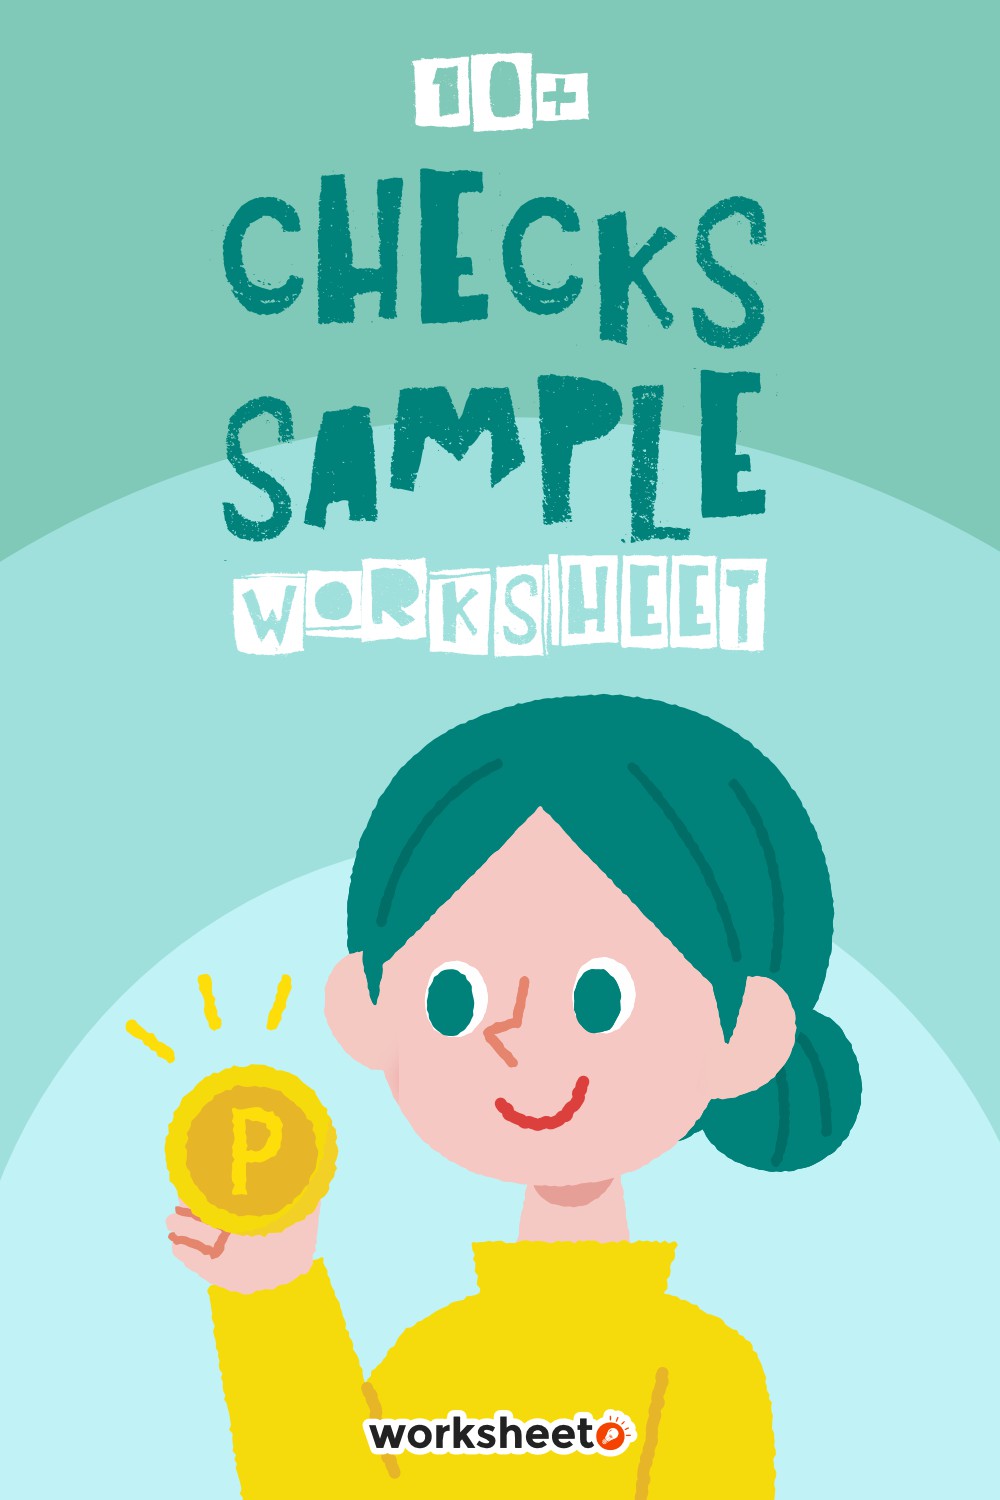 11 Images of Checks Sample Worksheet